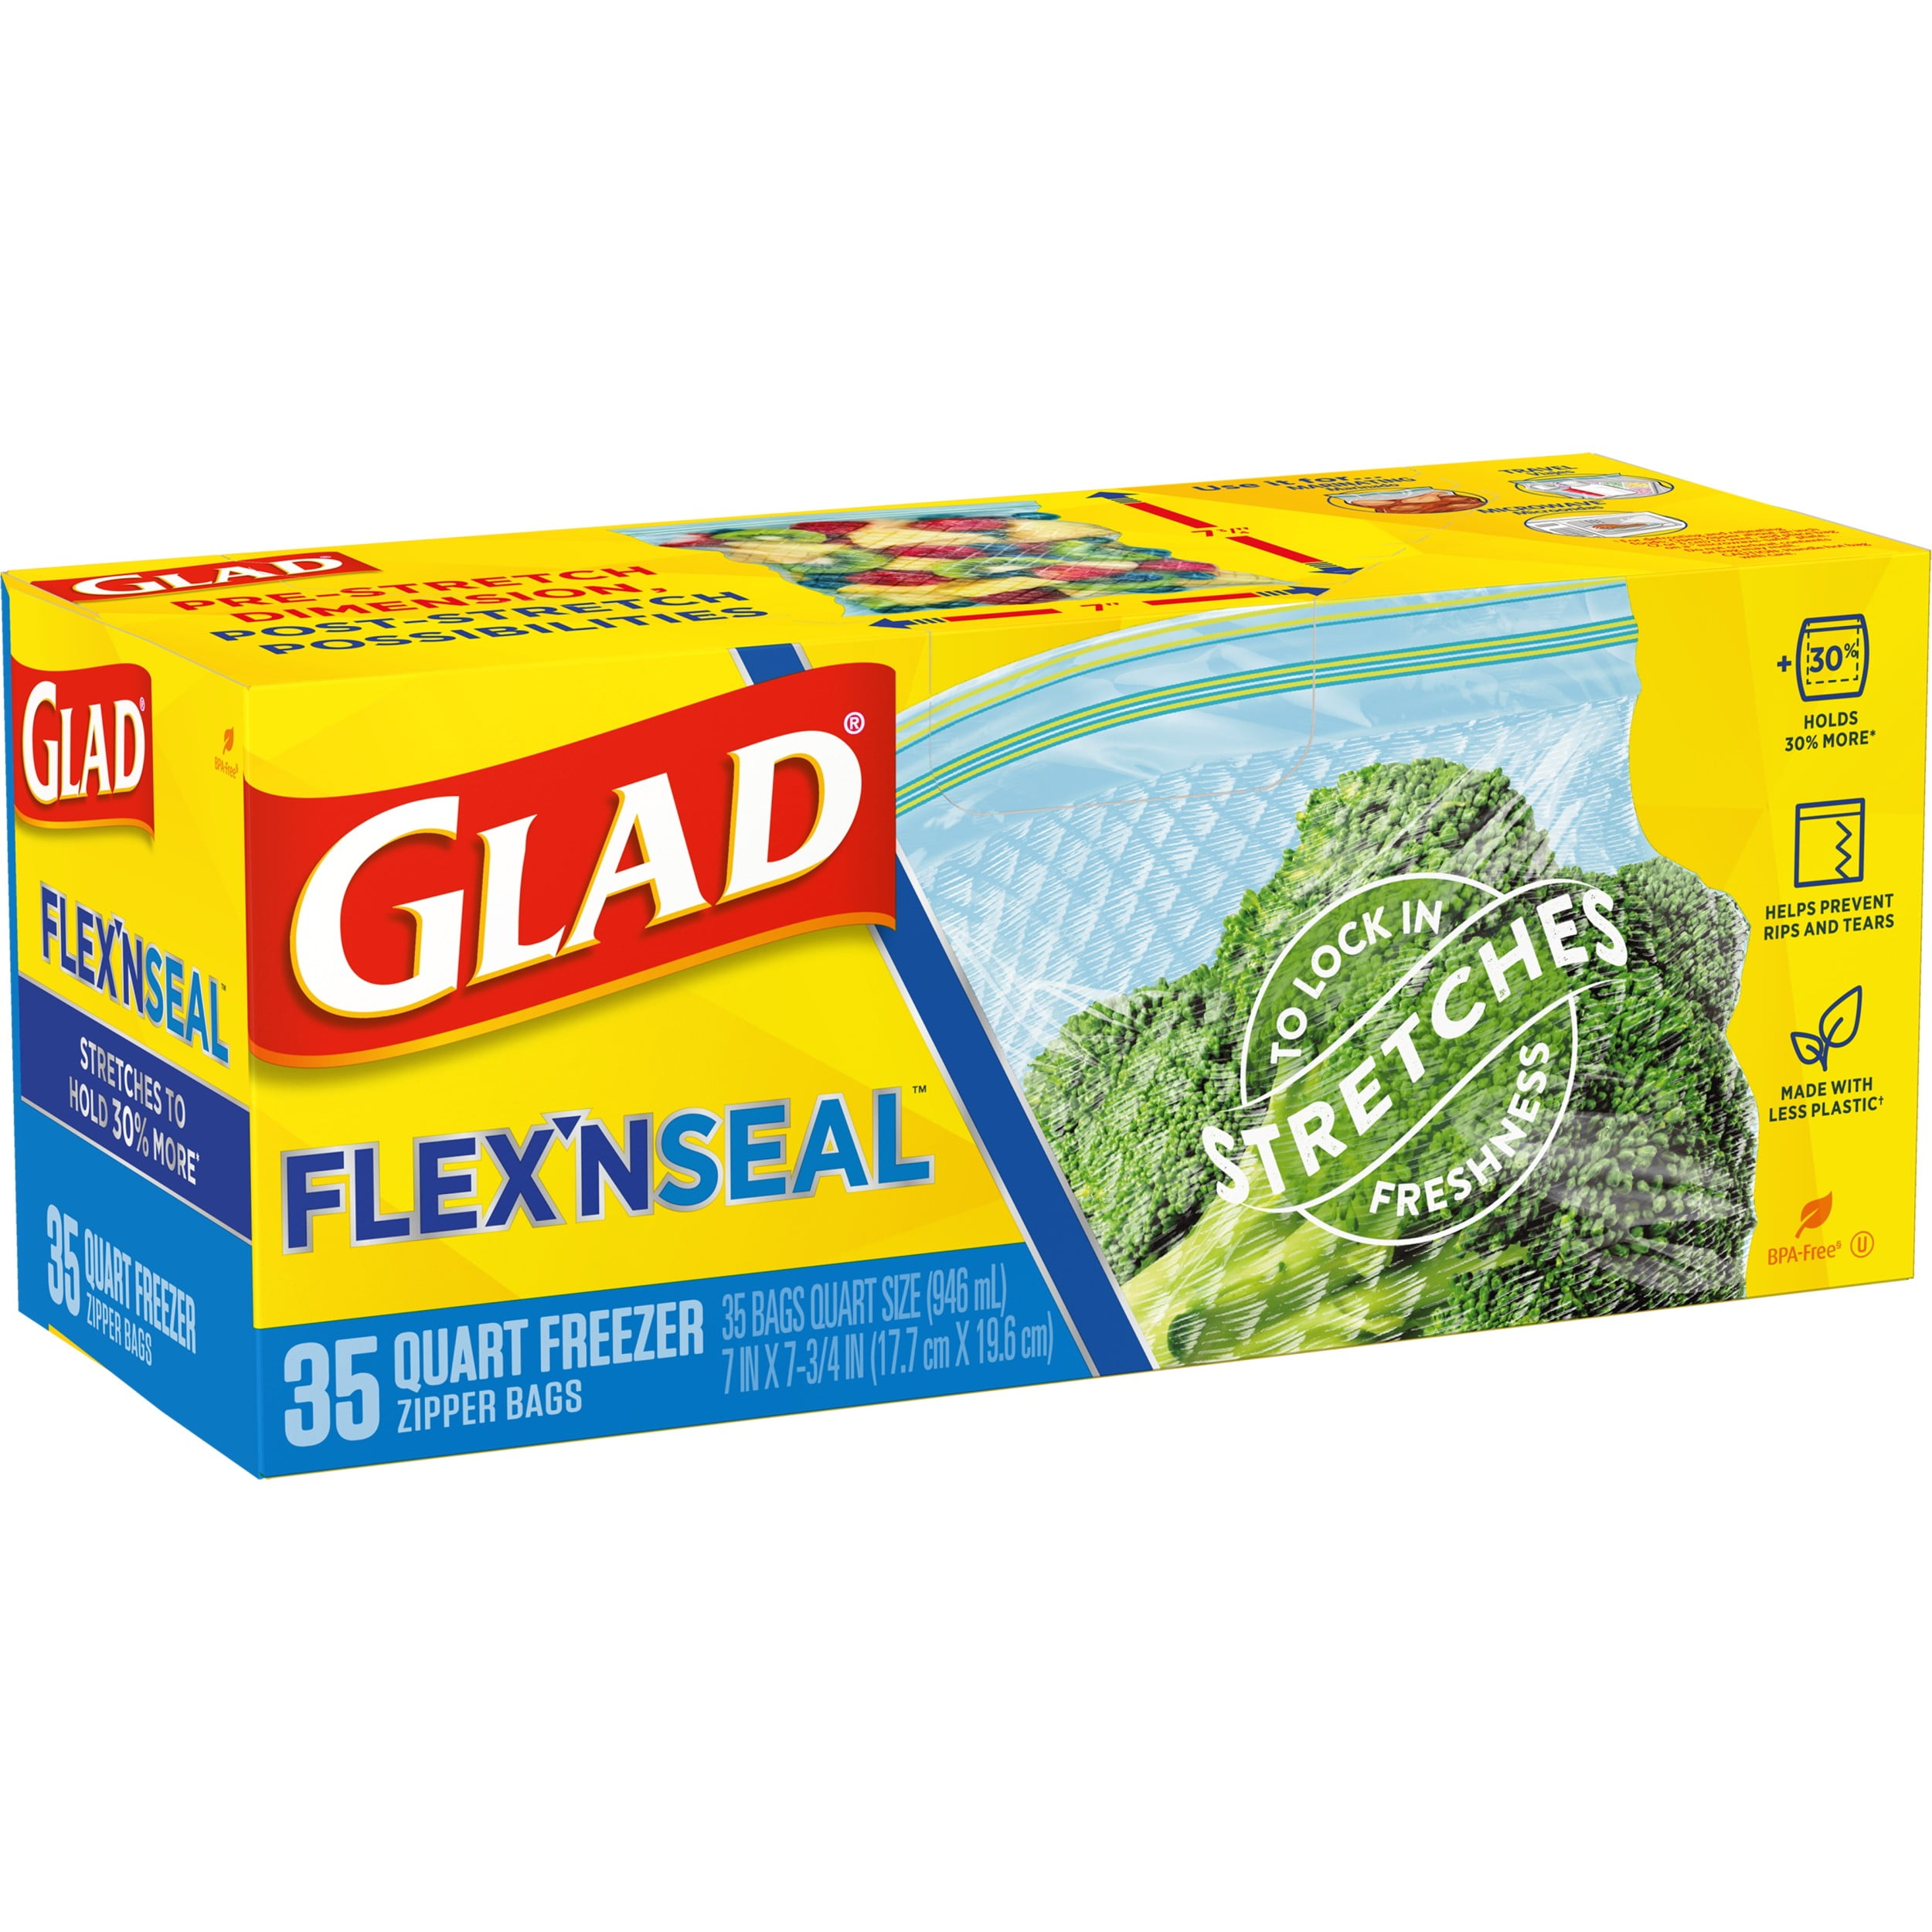 Glad® Freezer Bag 15 ct Gallon - Glad Philippines